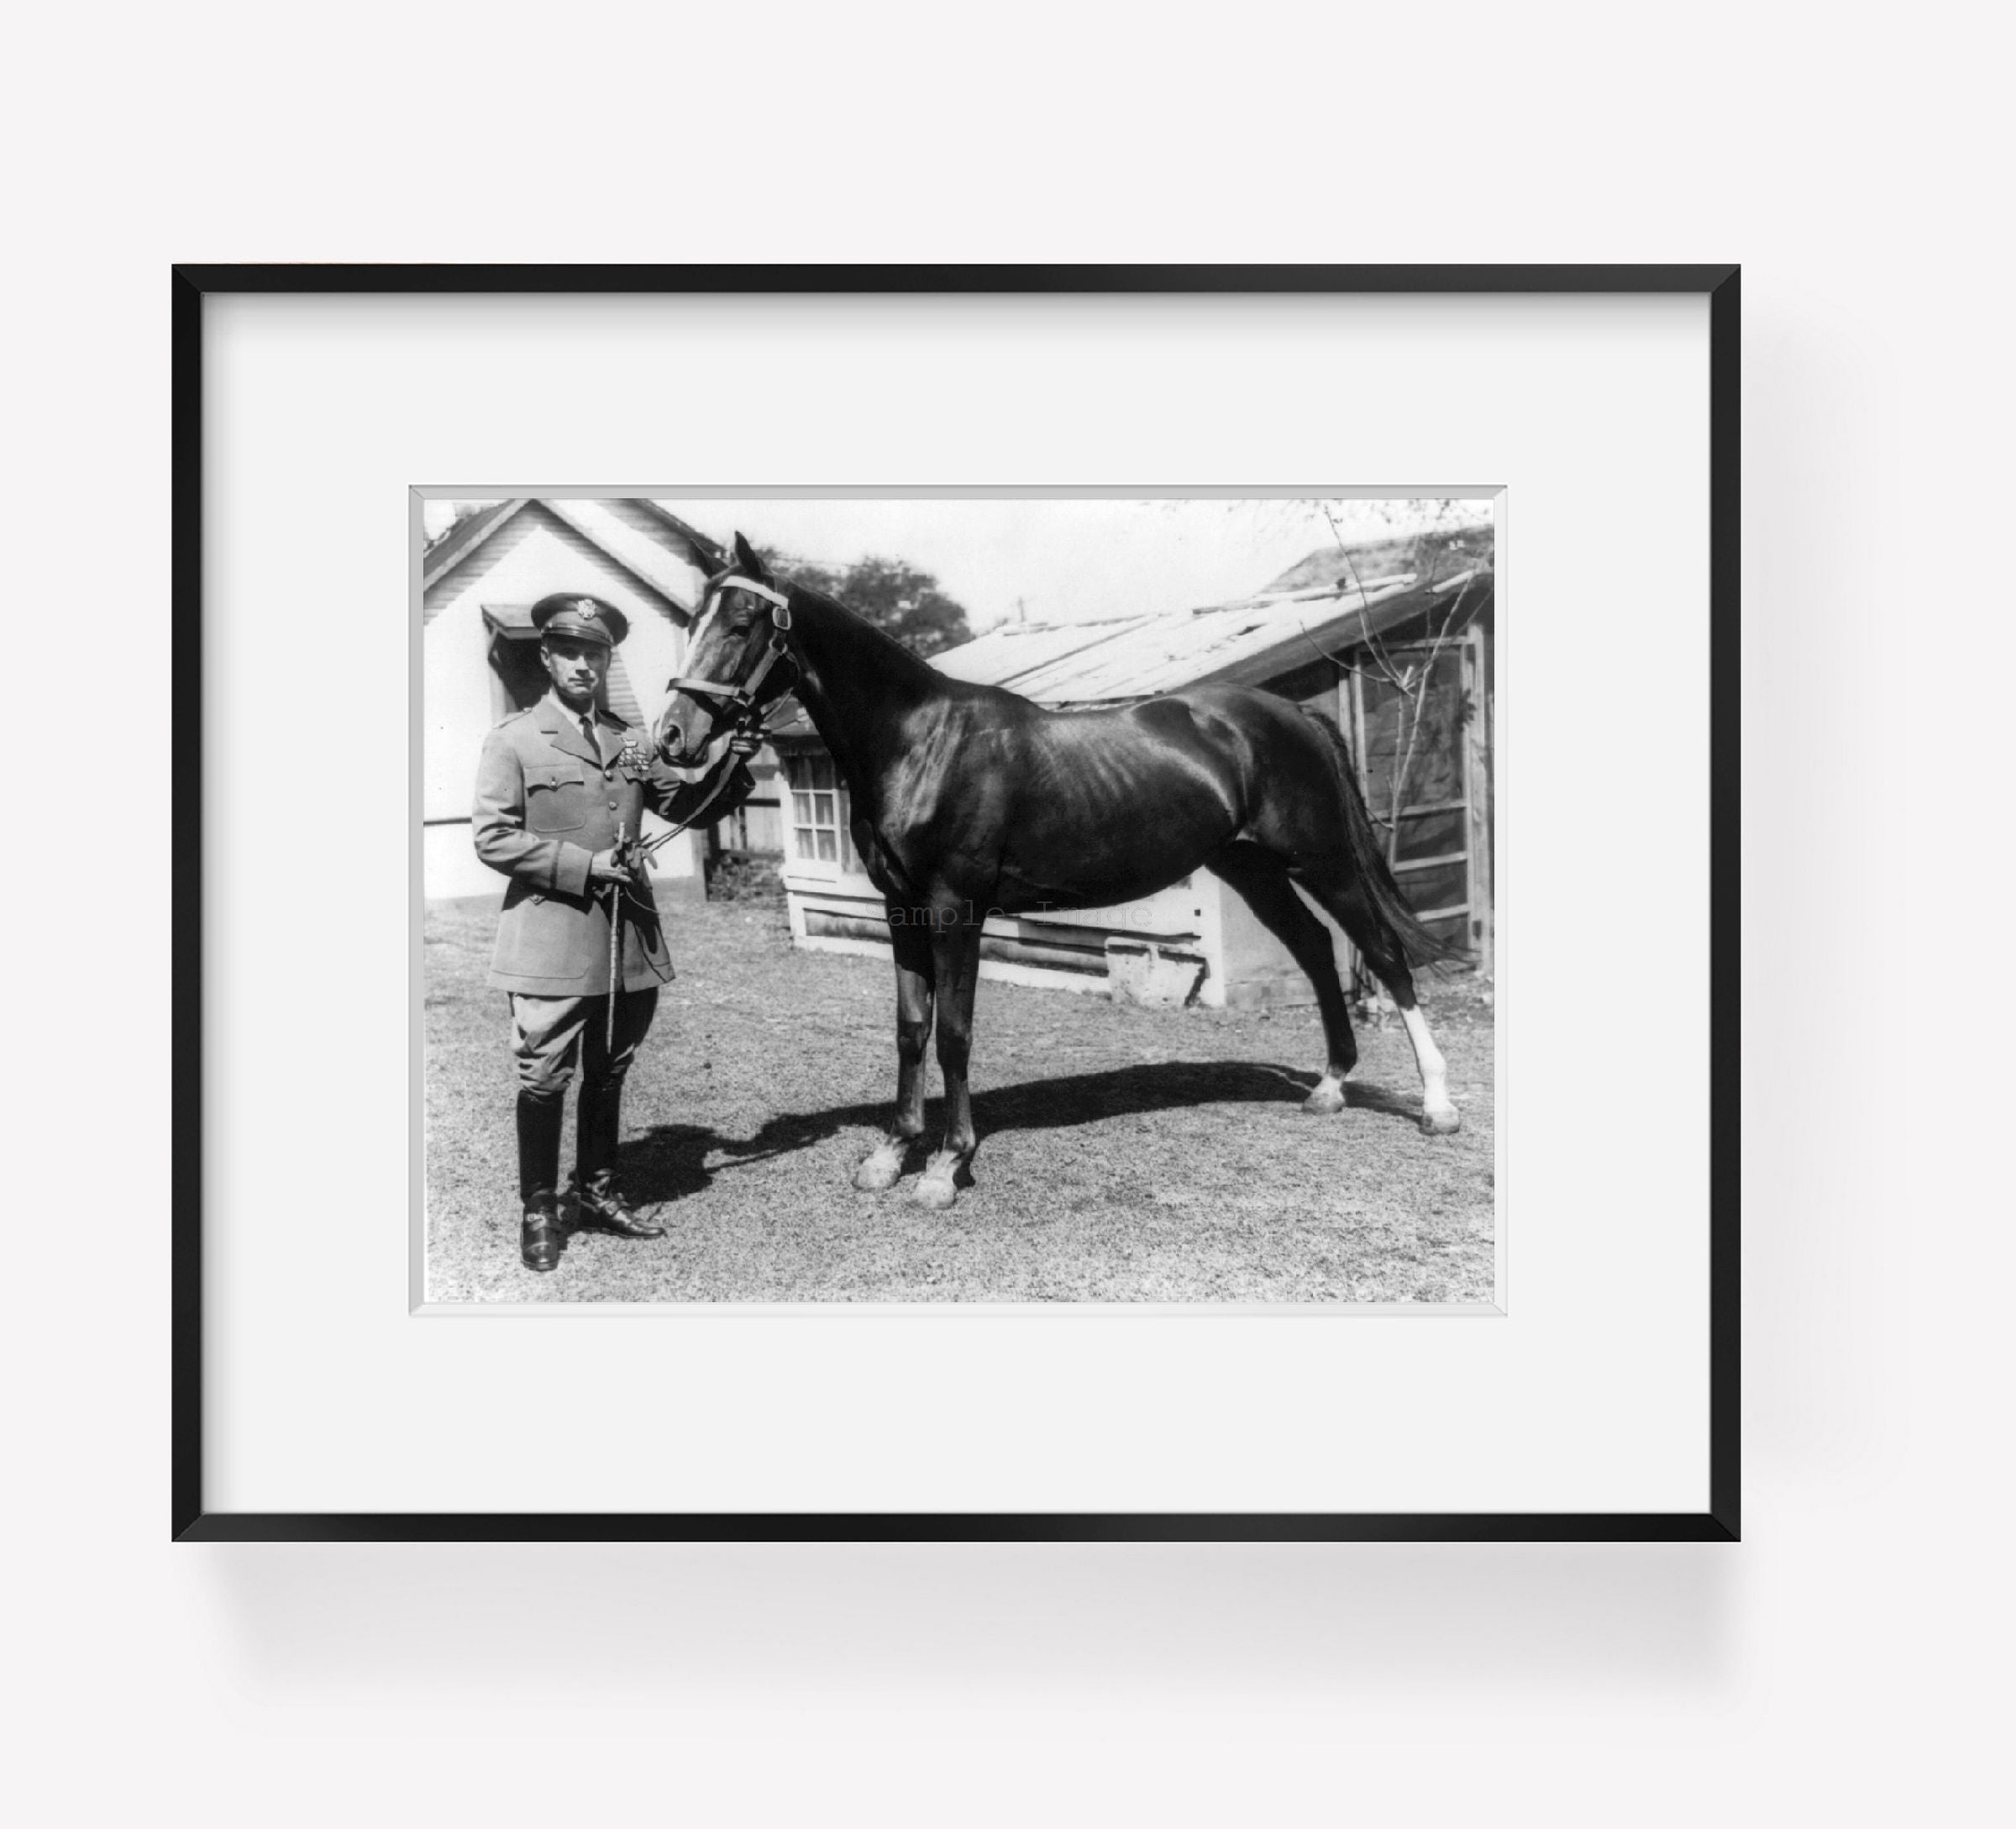 Photo: William ('Billy') Mitchell, 1879-1936, in uniform, standing with horse, Gener